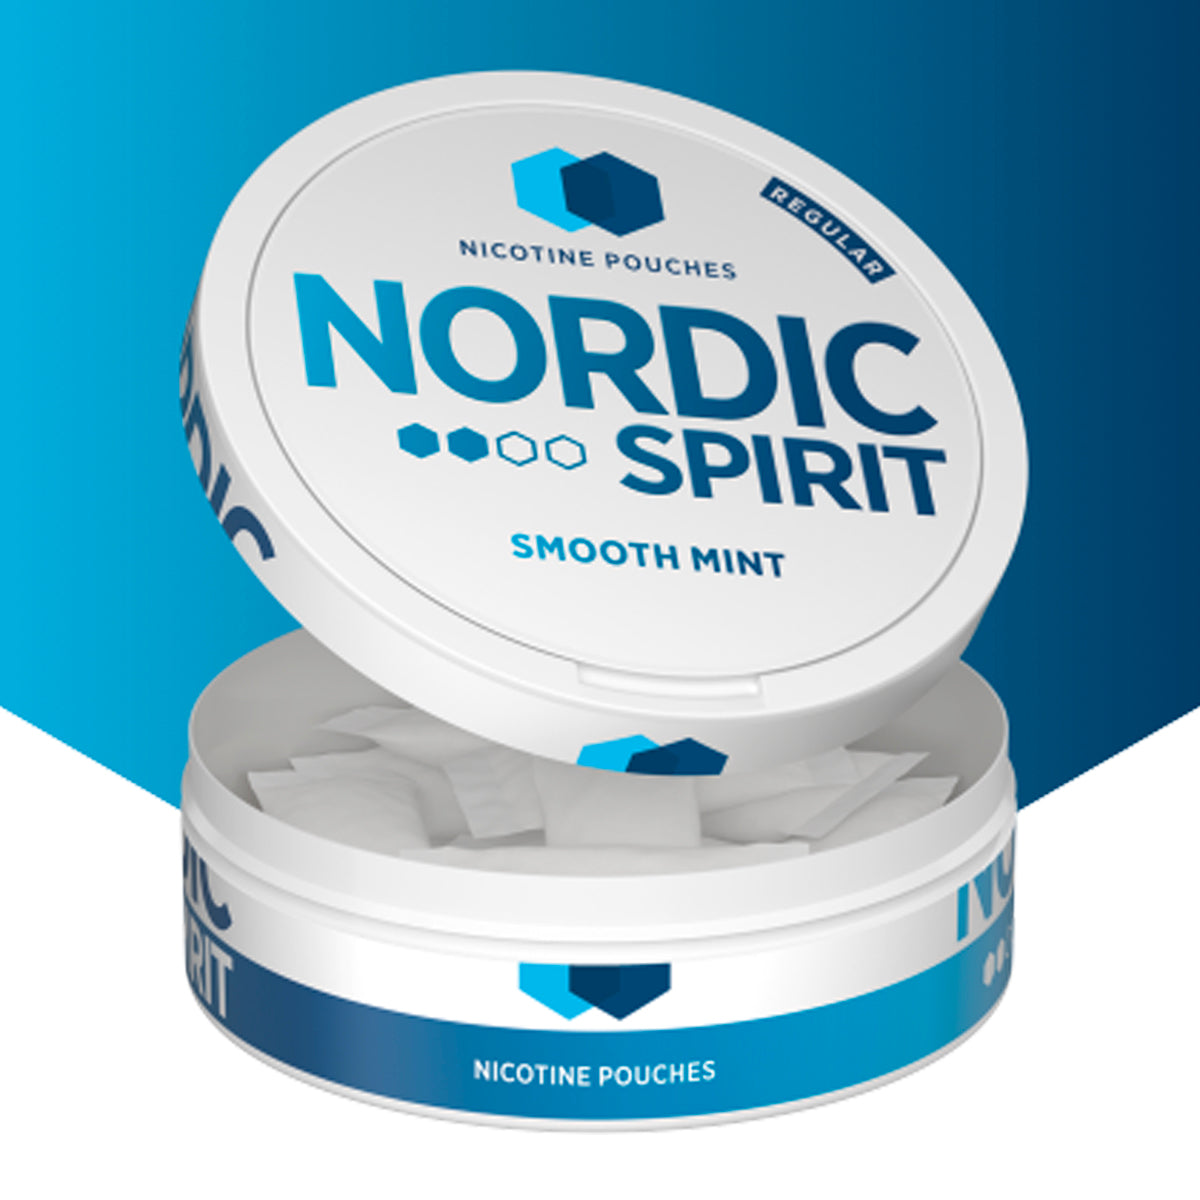 nordic spirit banner